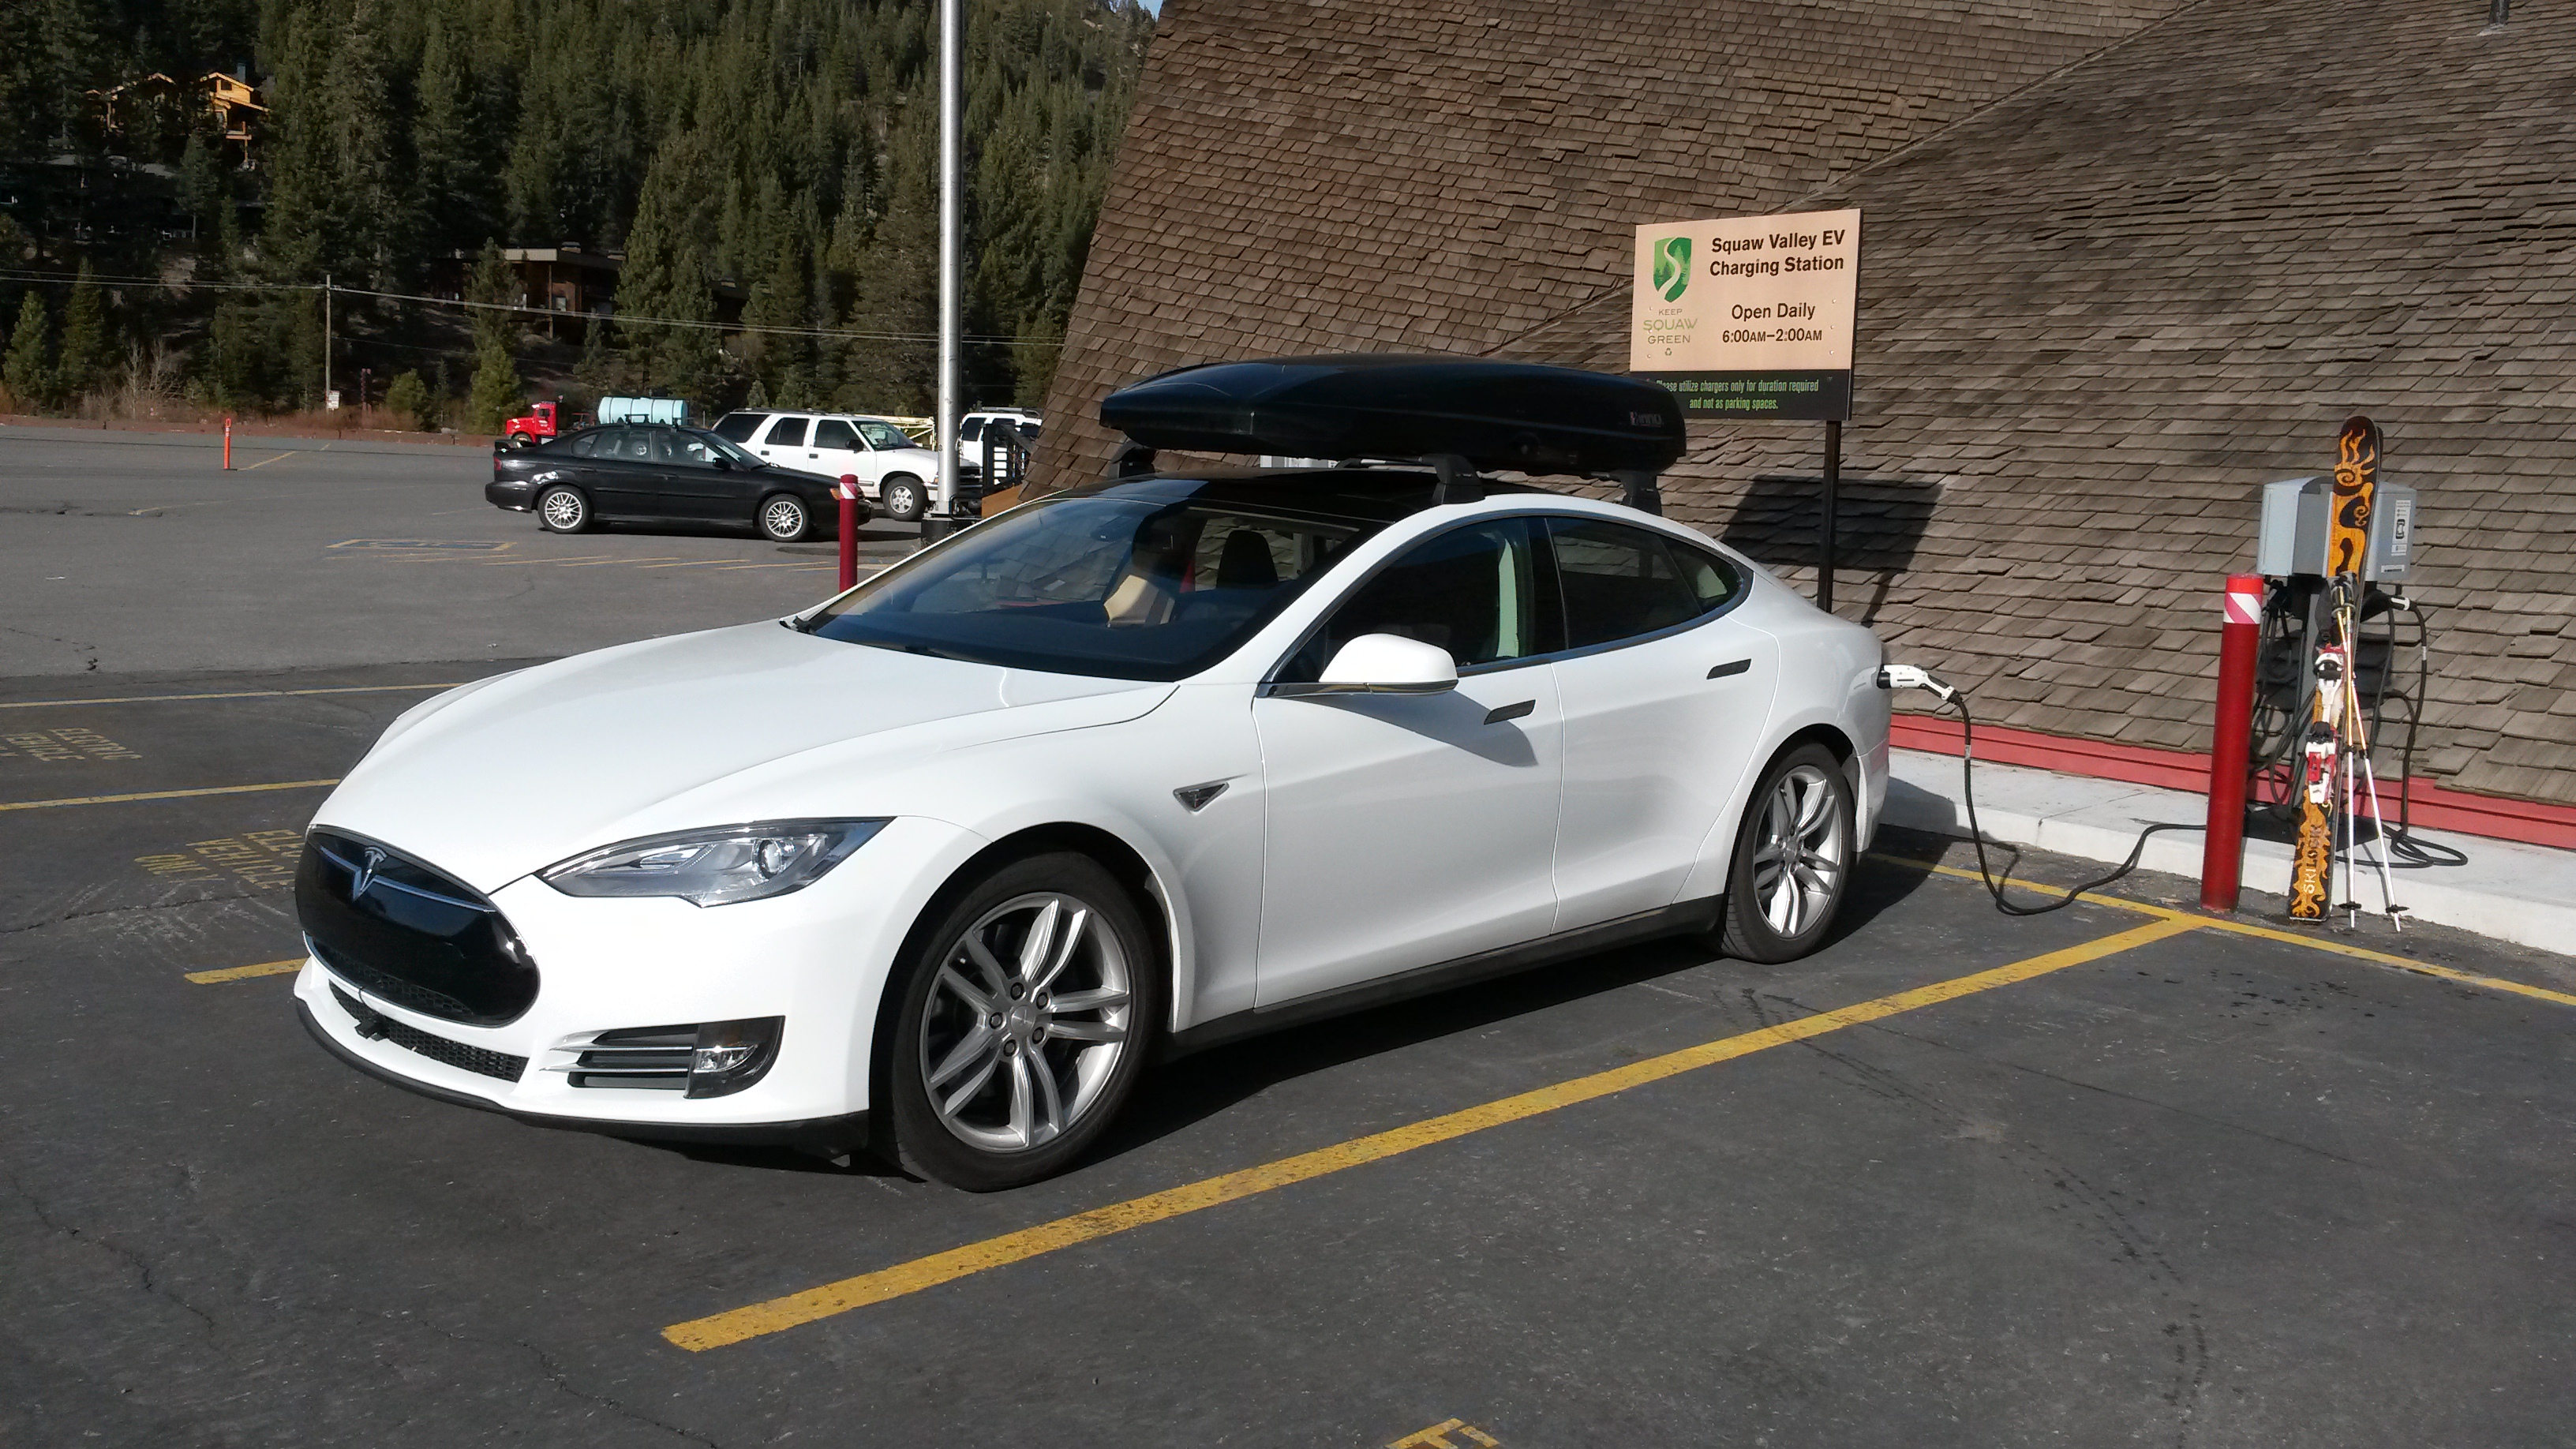 New Model S roof rack from Tesla | Page 4 | Tesla Motors Club